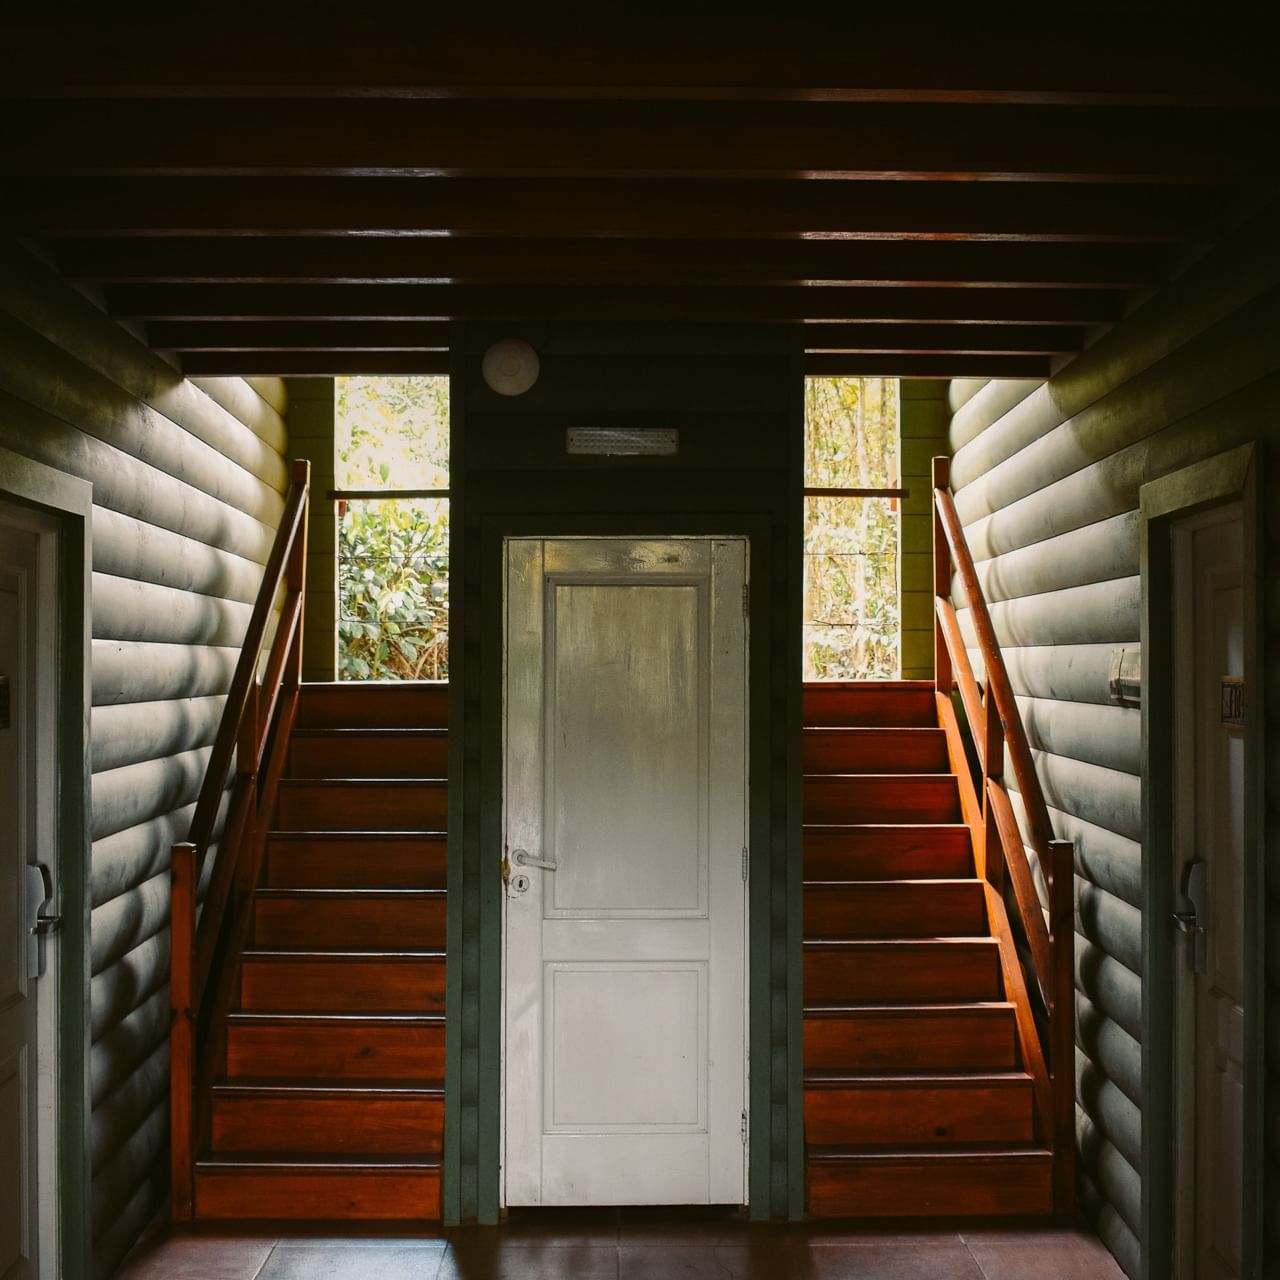 View of an indoor stairway at La Cantera Lodge de Selva